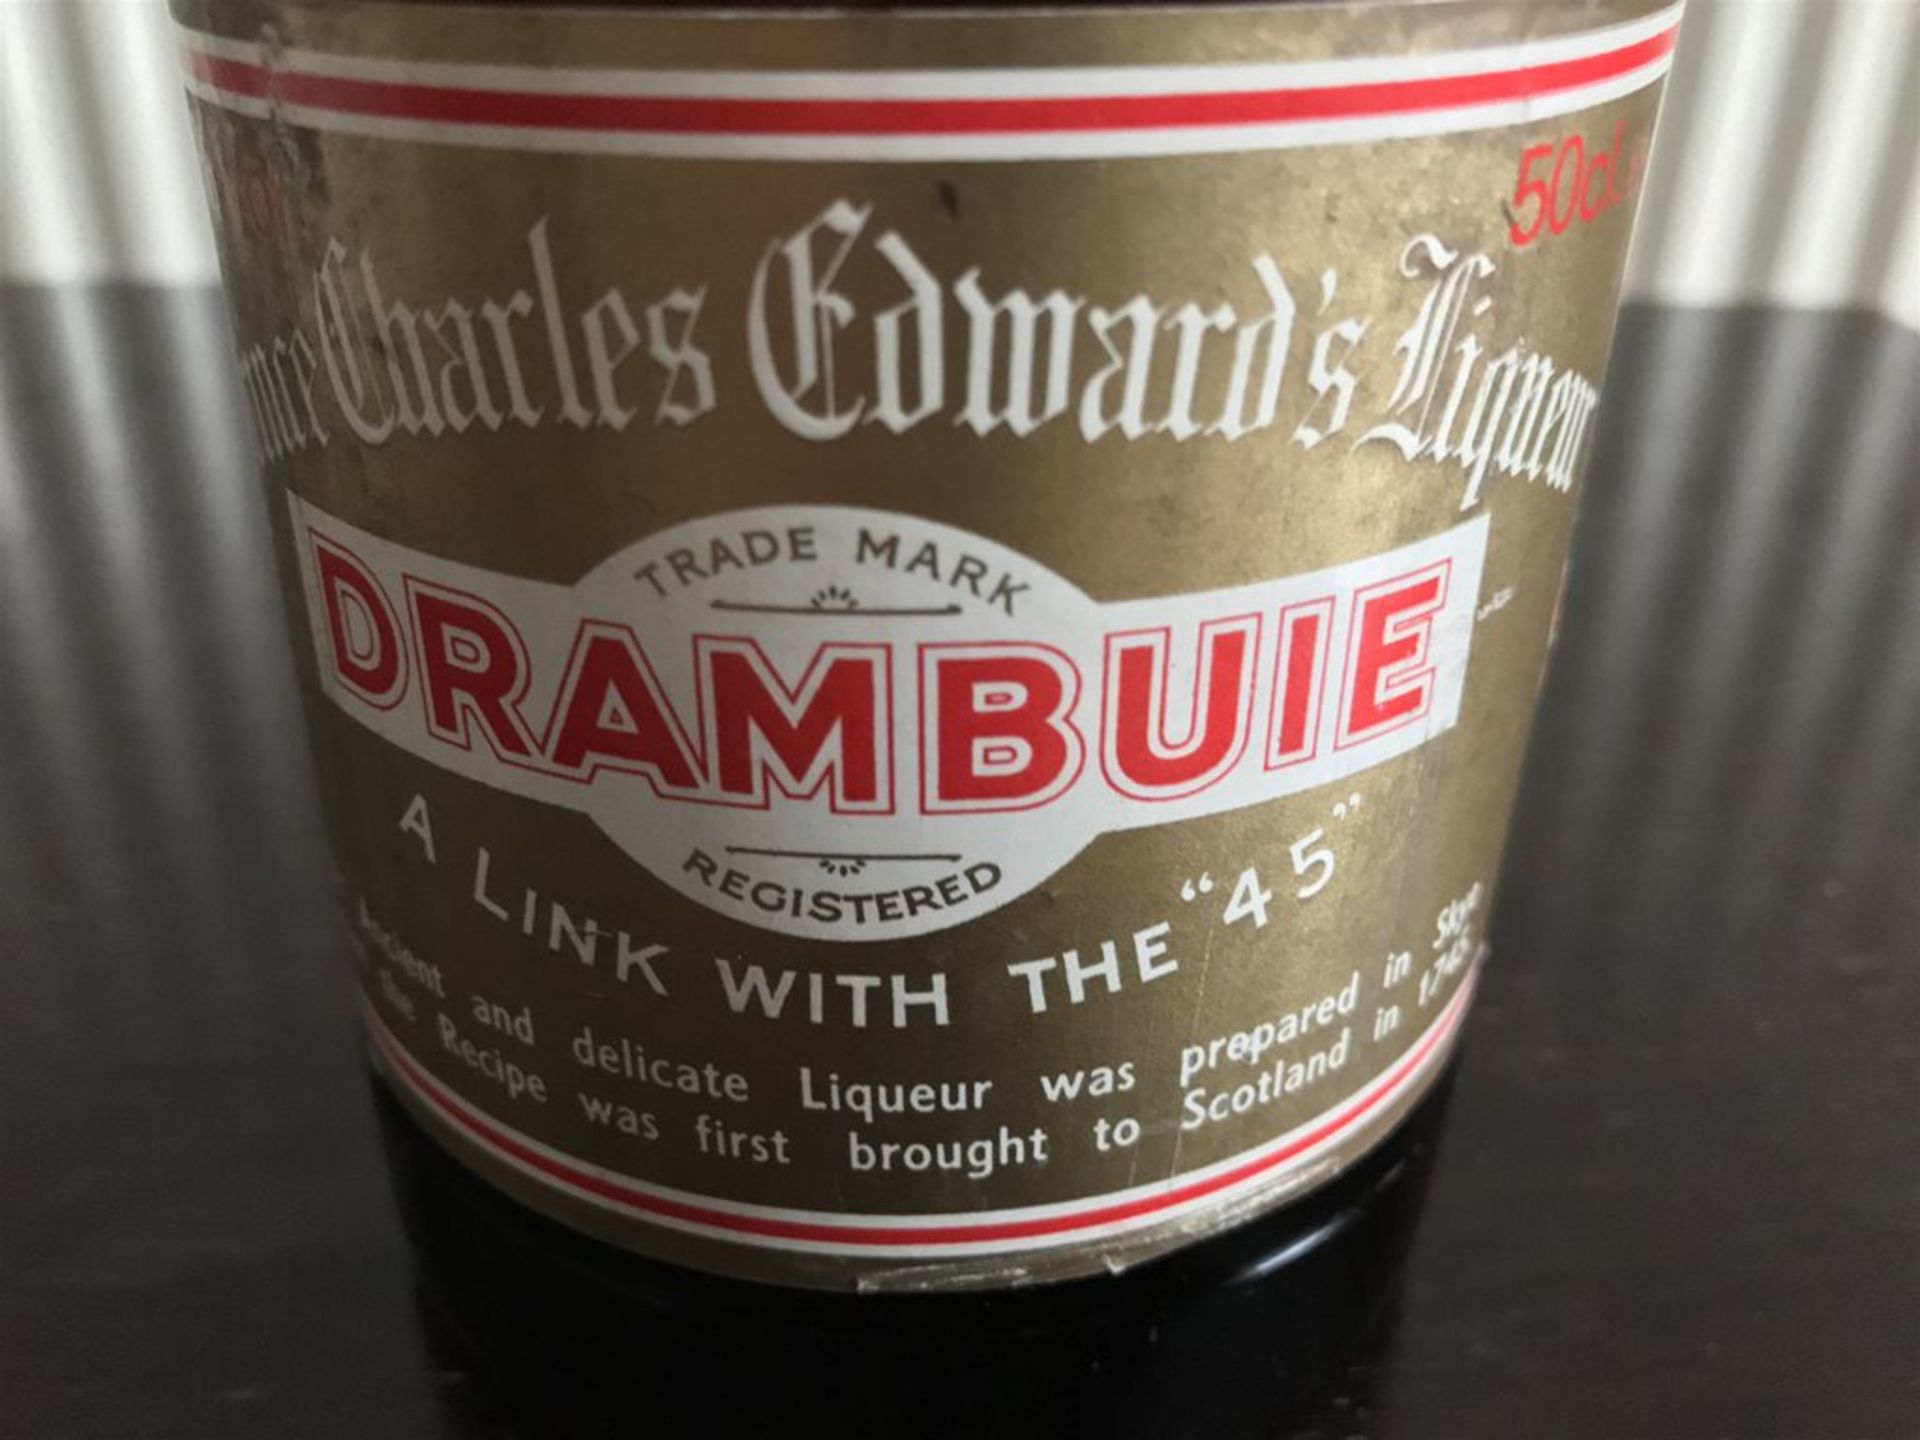 Vintage Bottle of Drambuie Prince Charles Edwards Liqueur Sealed - Circa 1970 - Image 3 of 4